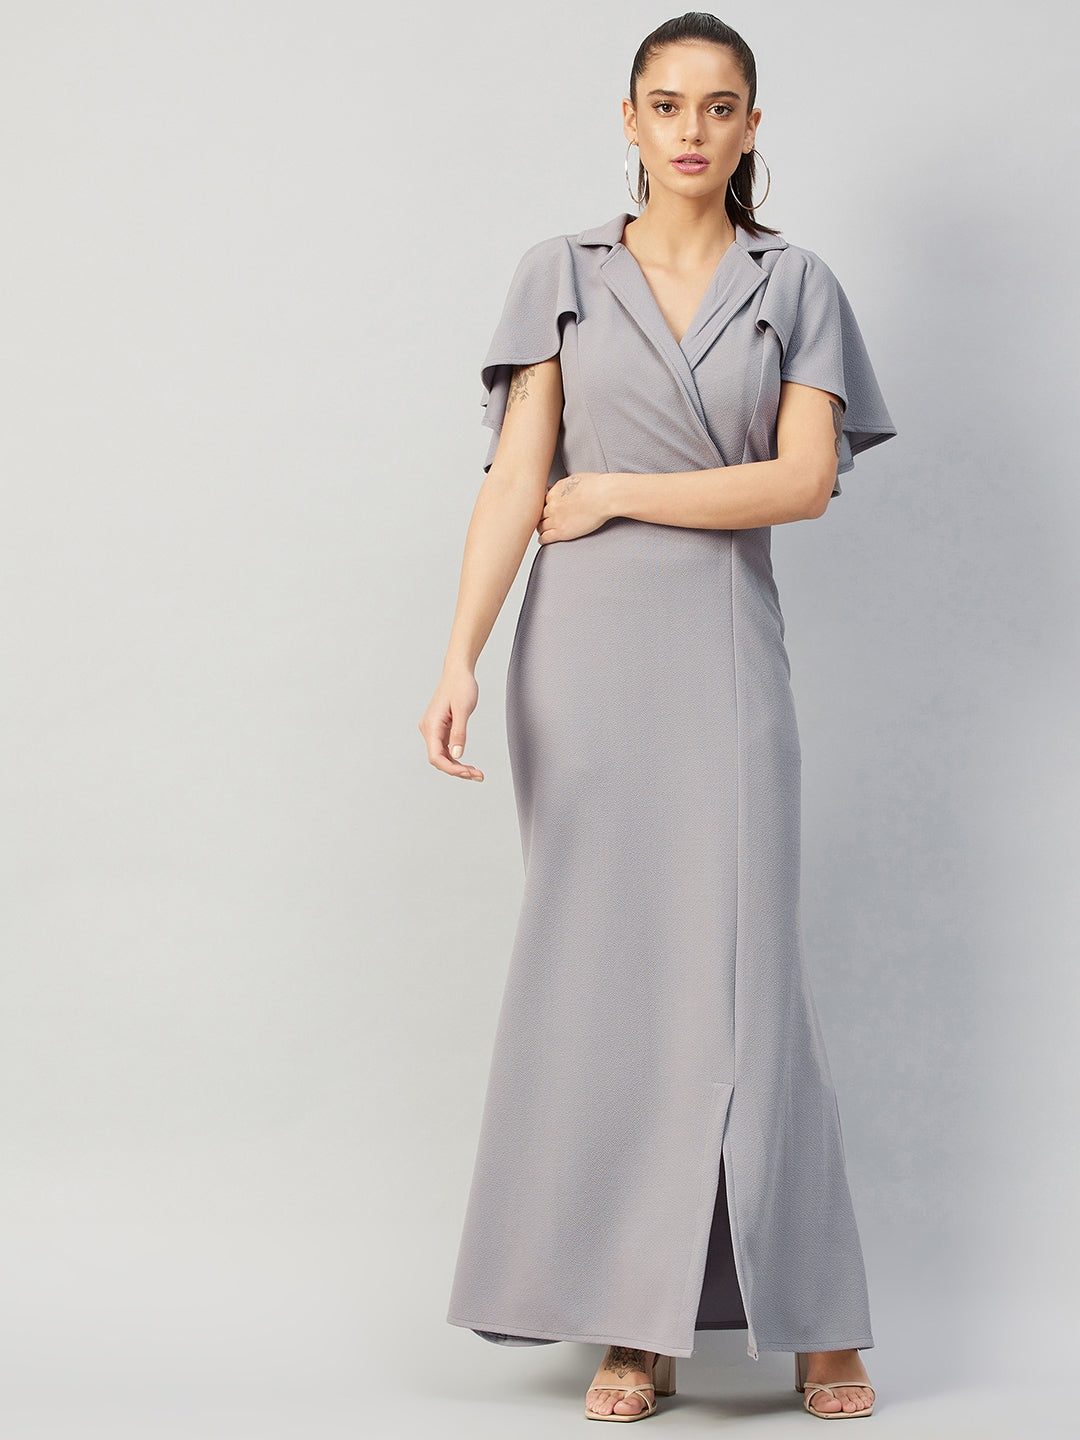 Athena Grey Maxi Dress with Cape - Athena Lifestyle